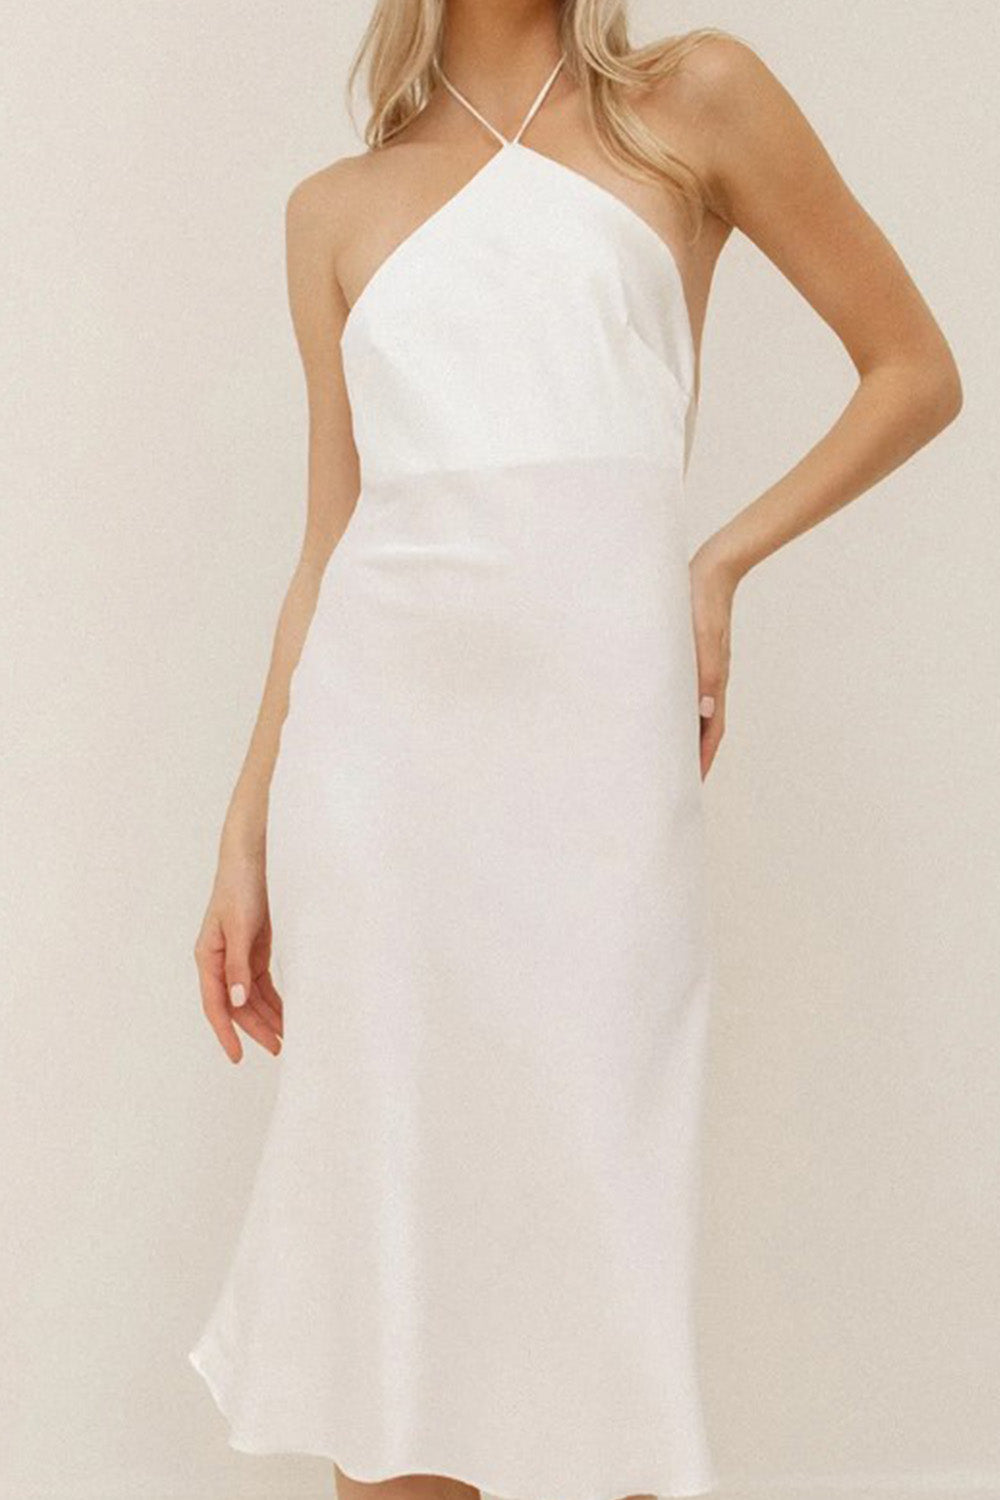 Opulent White Dress